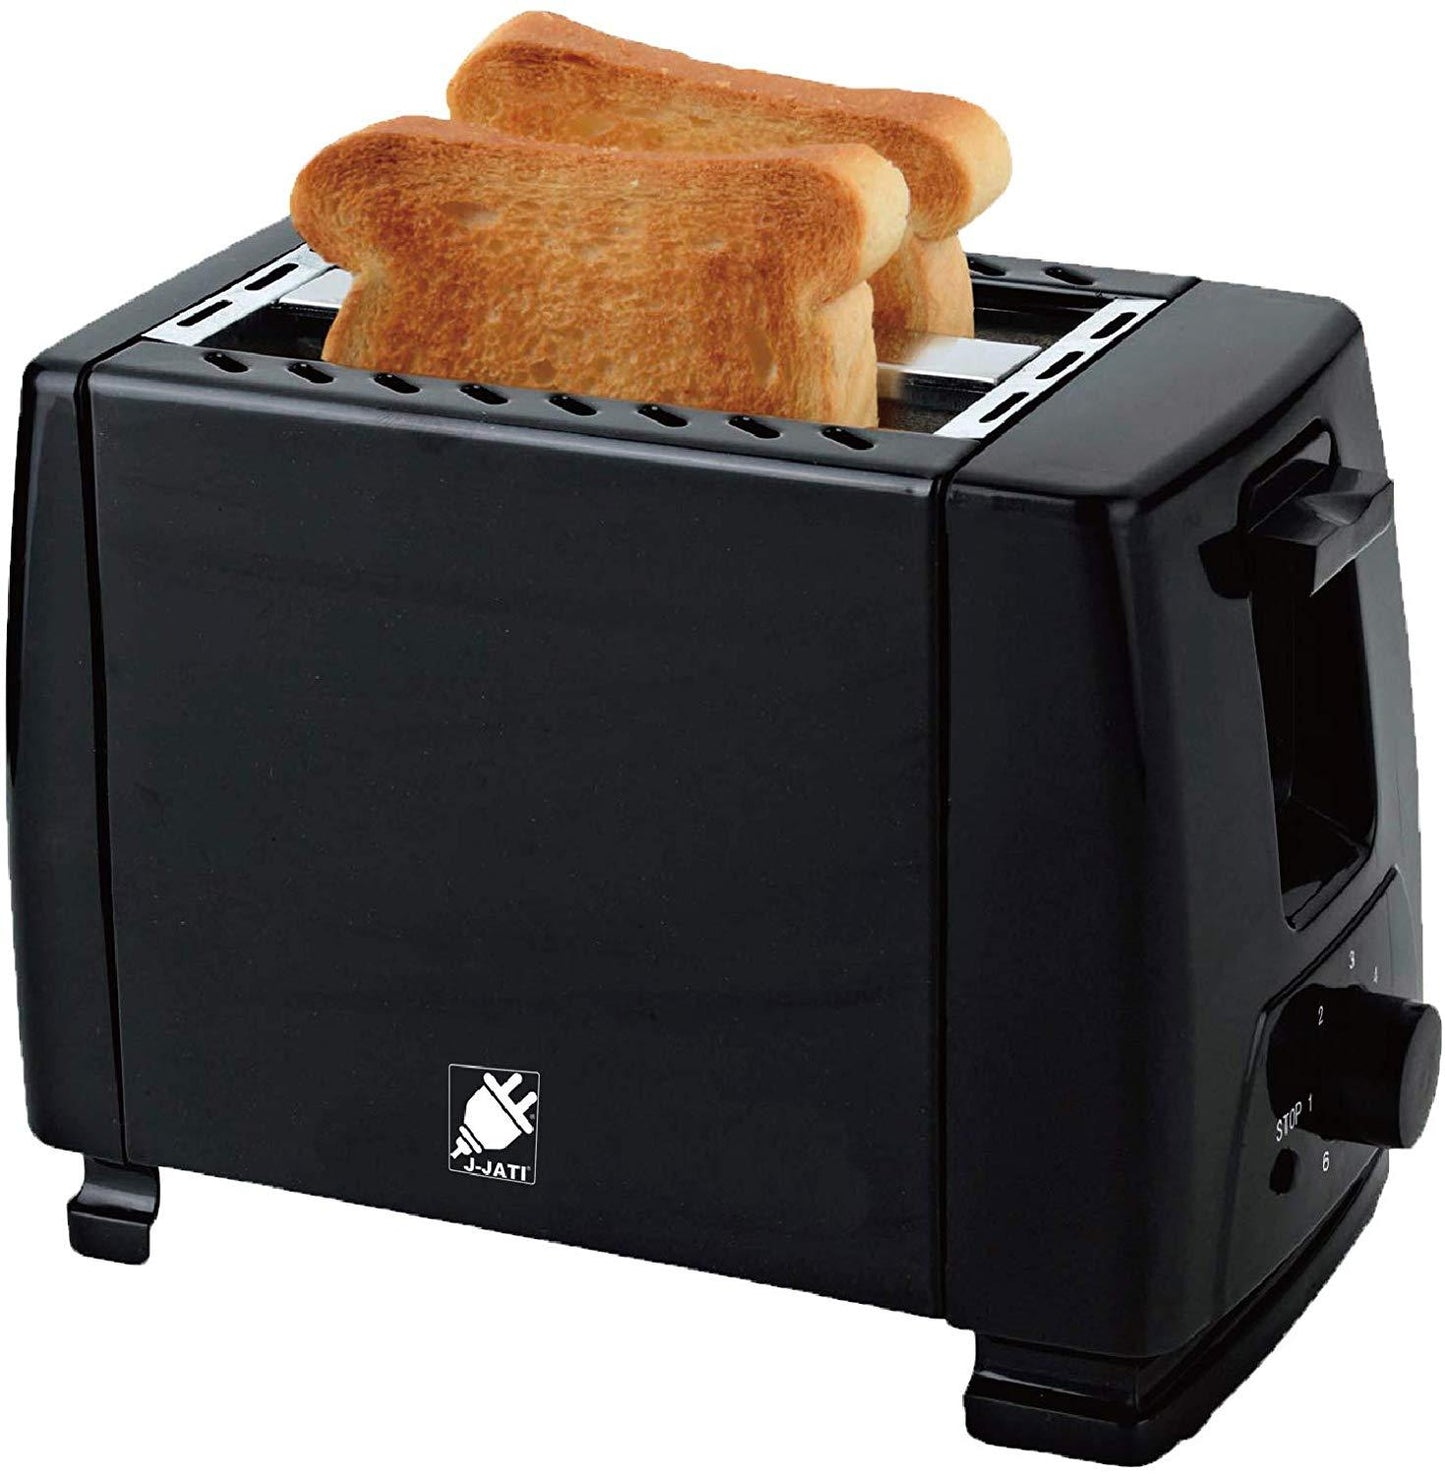 J-Jati 2 Slice Pop up Bread Toaster